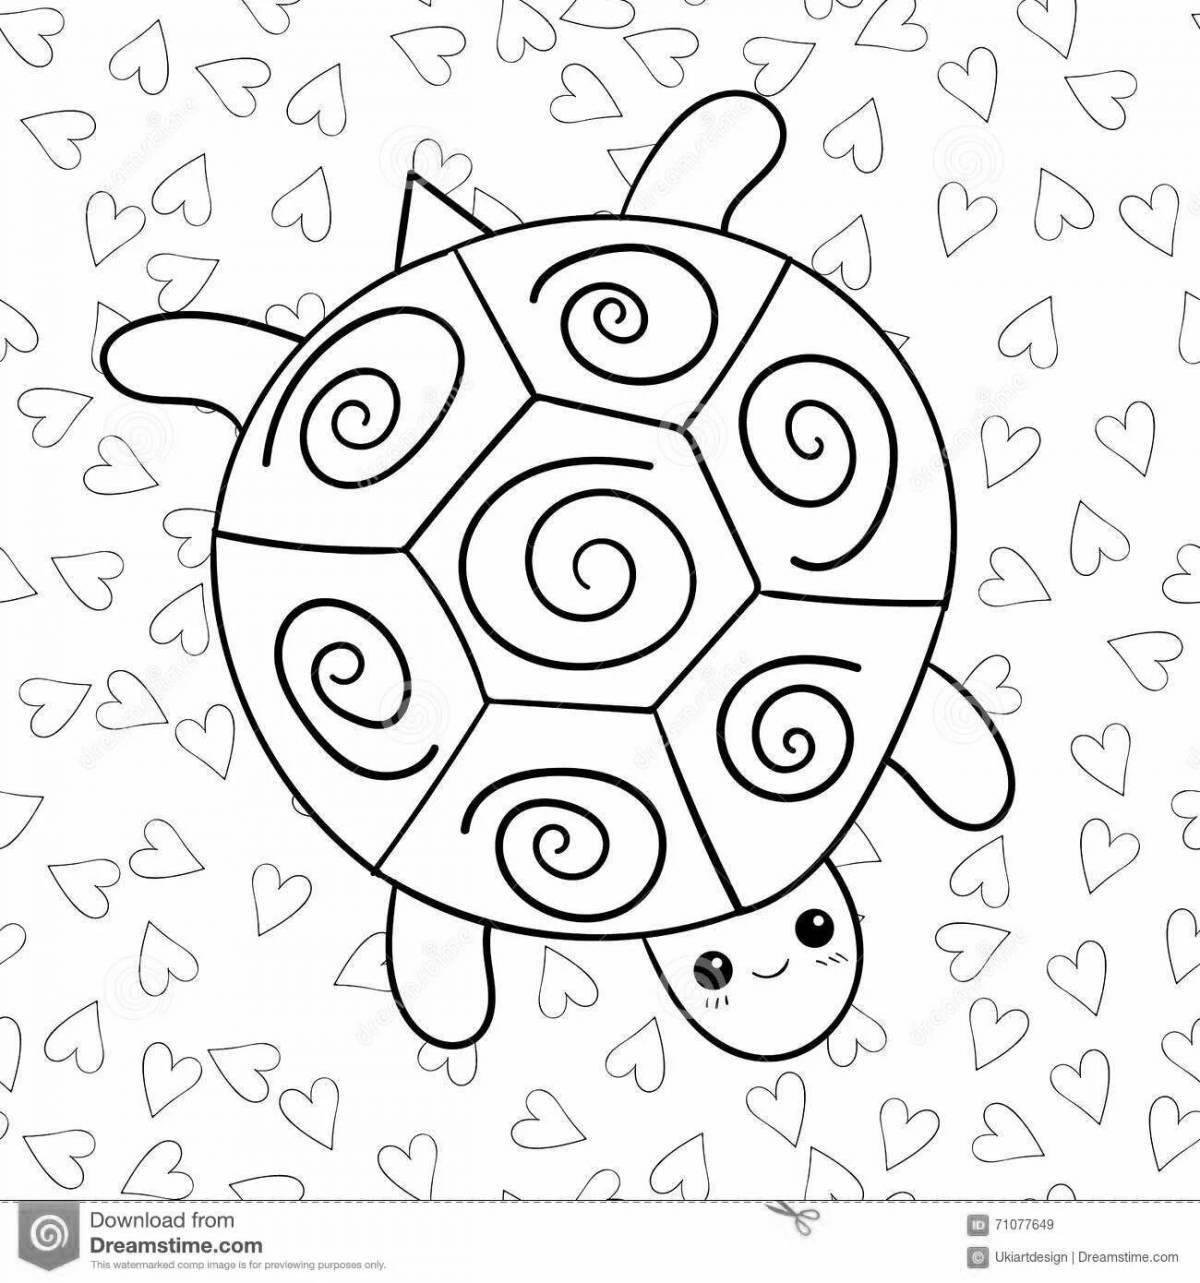 Exquisite cute turtle coloring book